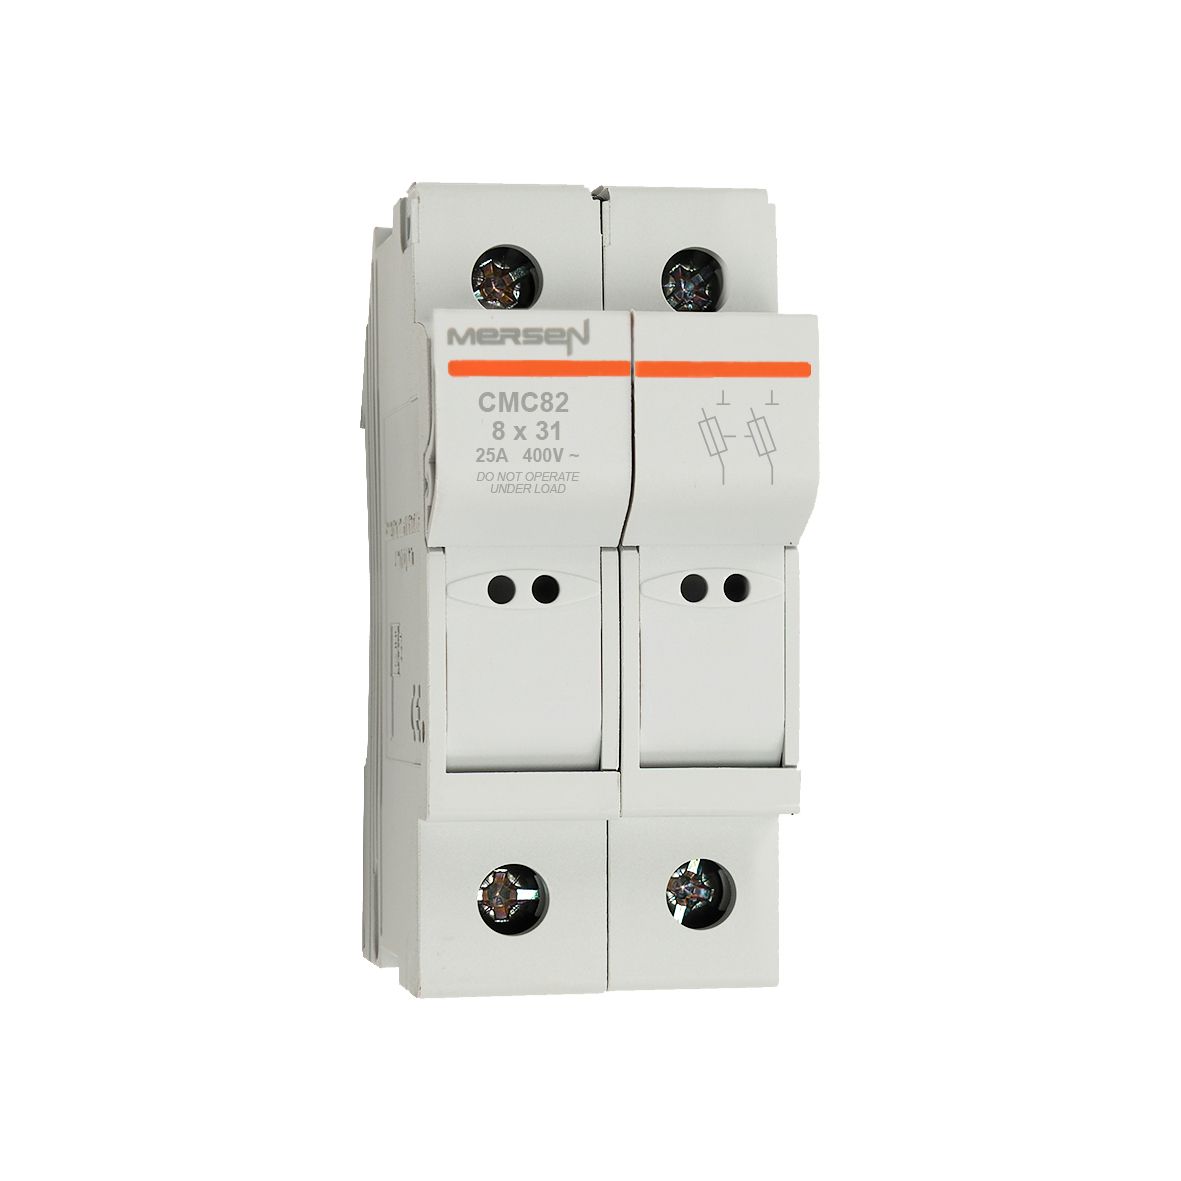 Q1062683 - CMC8 modular fuse holder, IEC, 2P, 8x32, DIN rail mounting, IP20